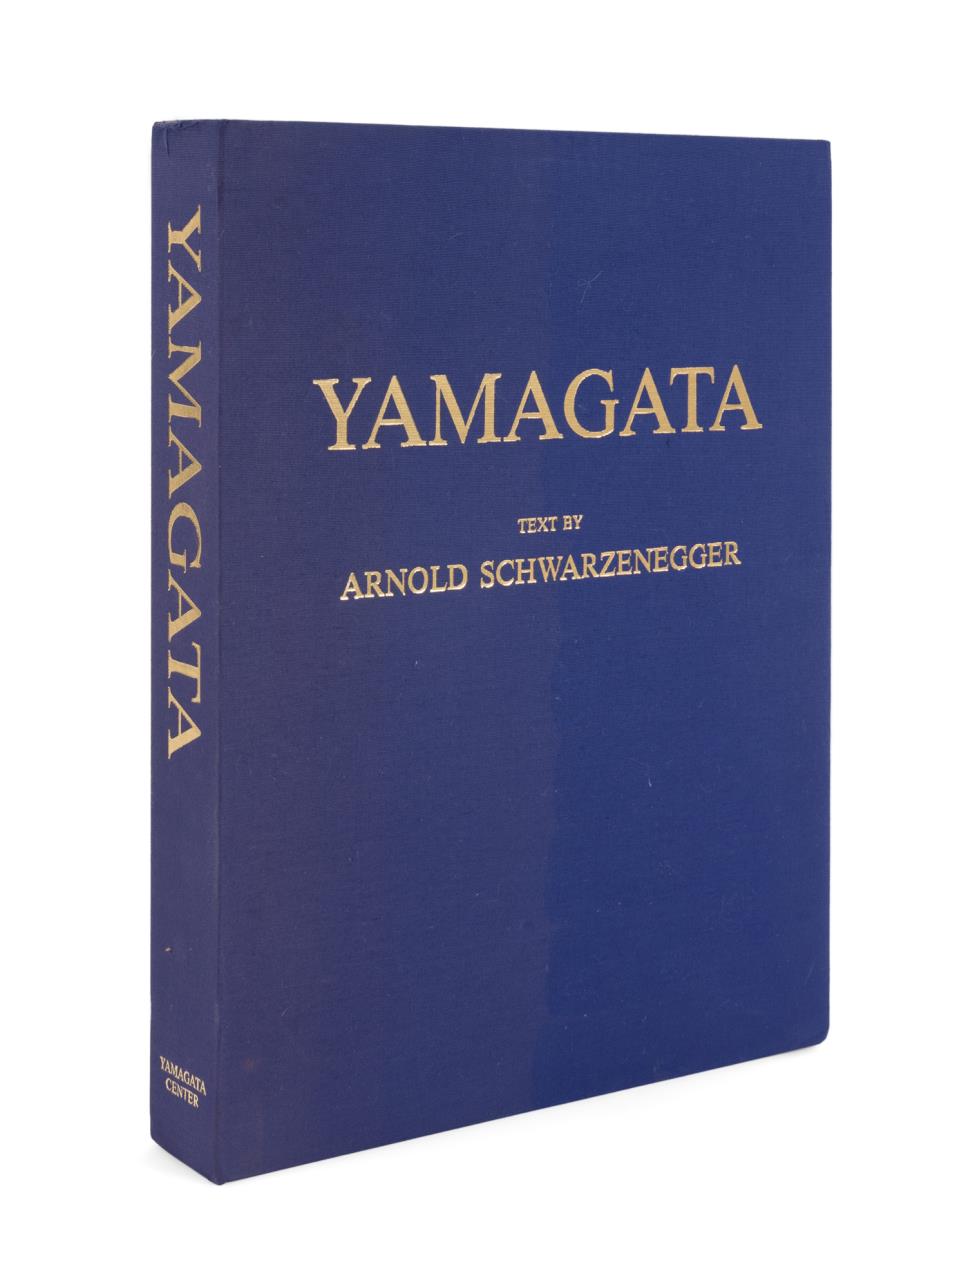 SIGNED YAMAGATA ARTIST MONOGRAPH 2c0084